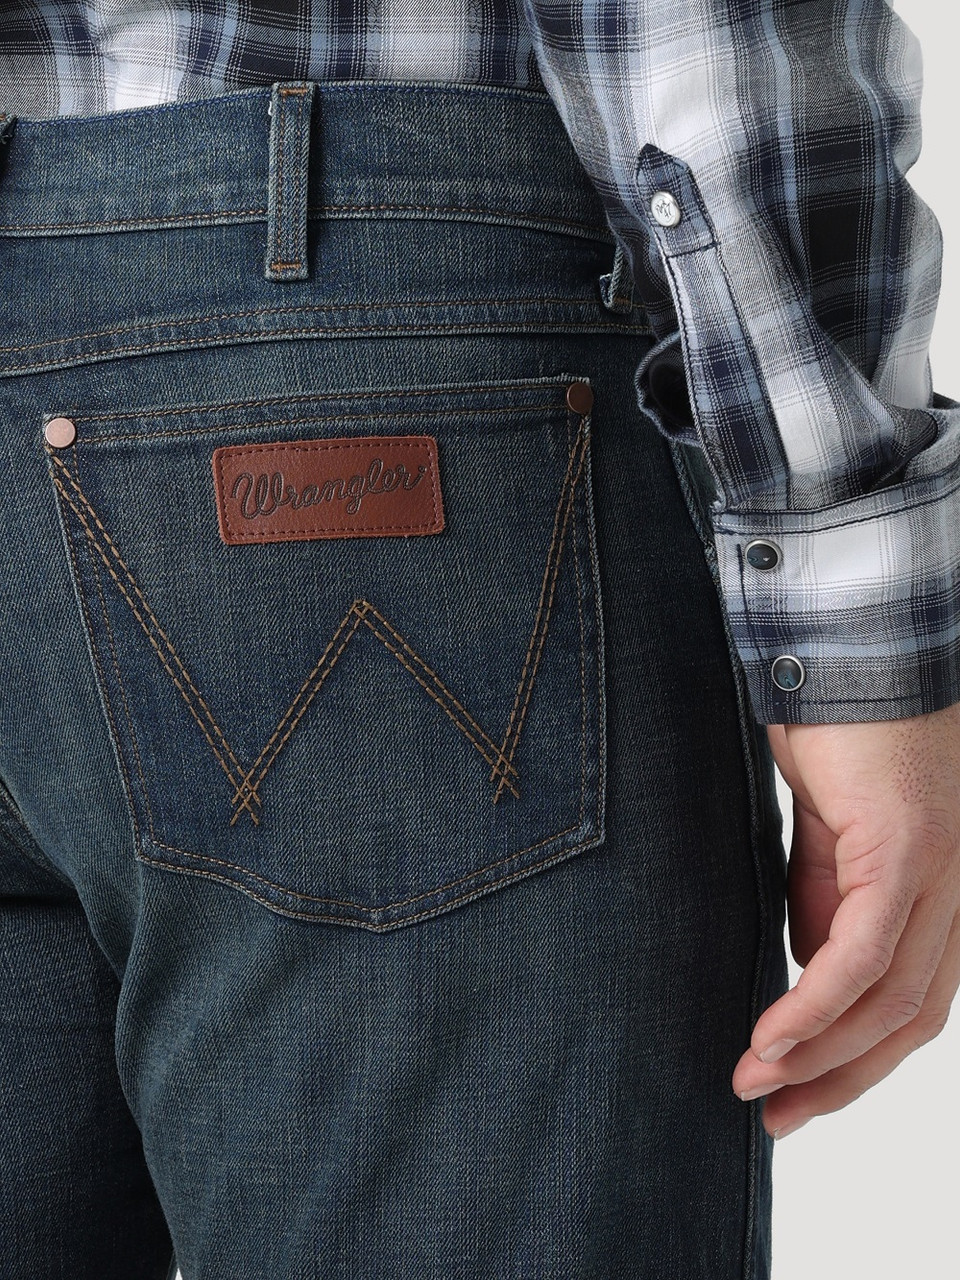 WRANGLER Authentic denim jeans Men's size 48x32 - torn belt loop